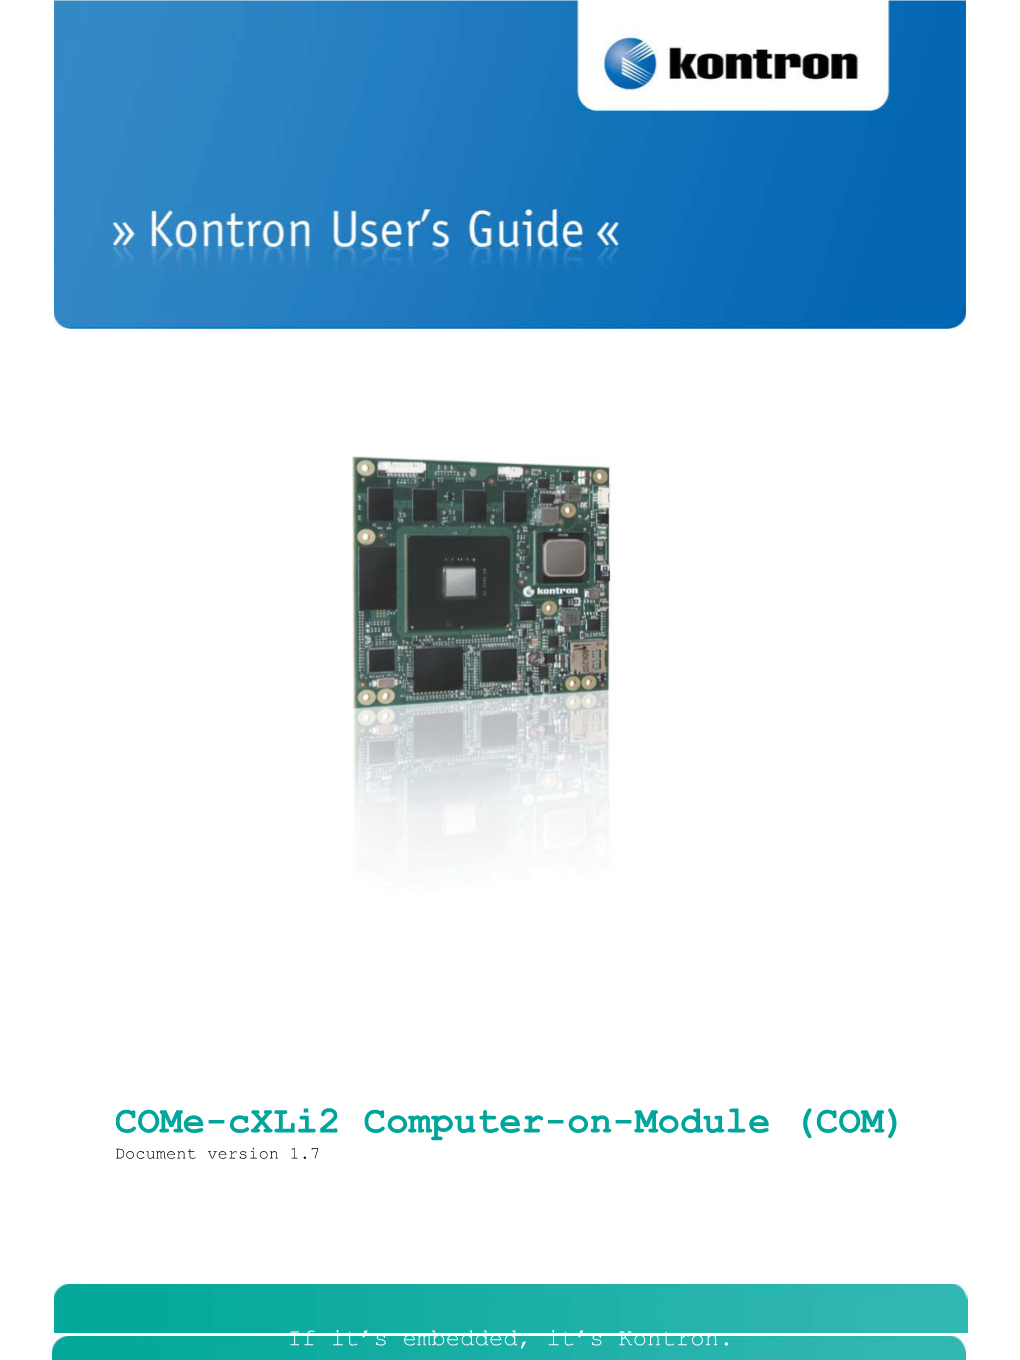 Come-Cxli2 Computer-On-Module (COM) Document Version 1.7